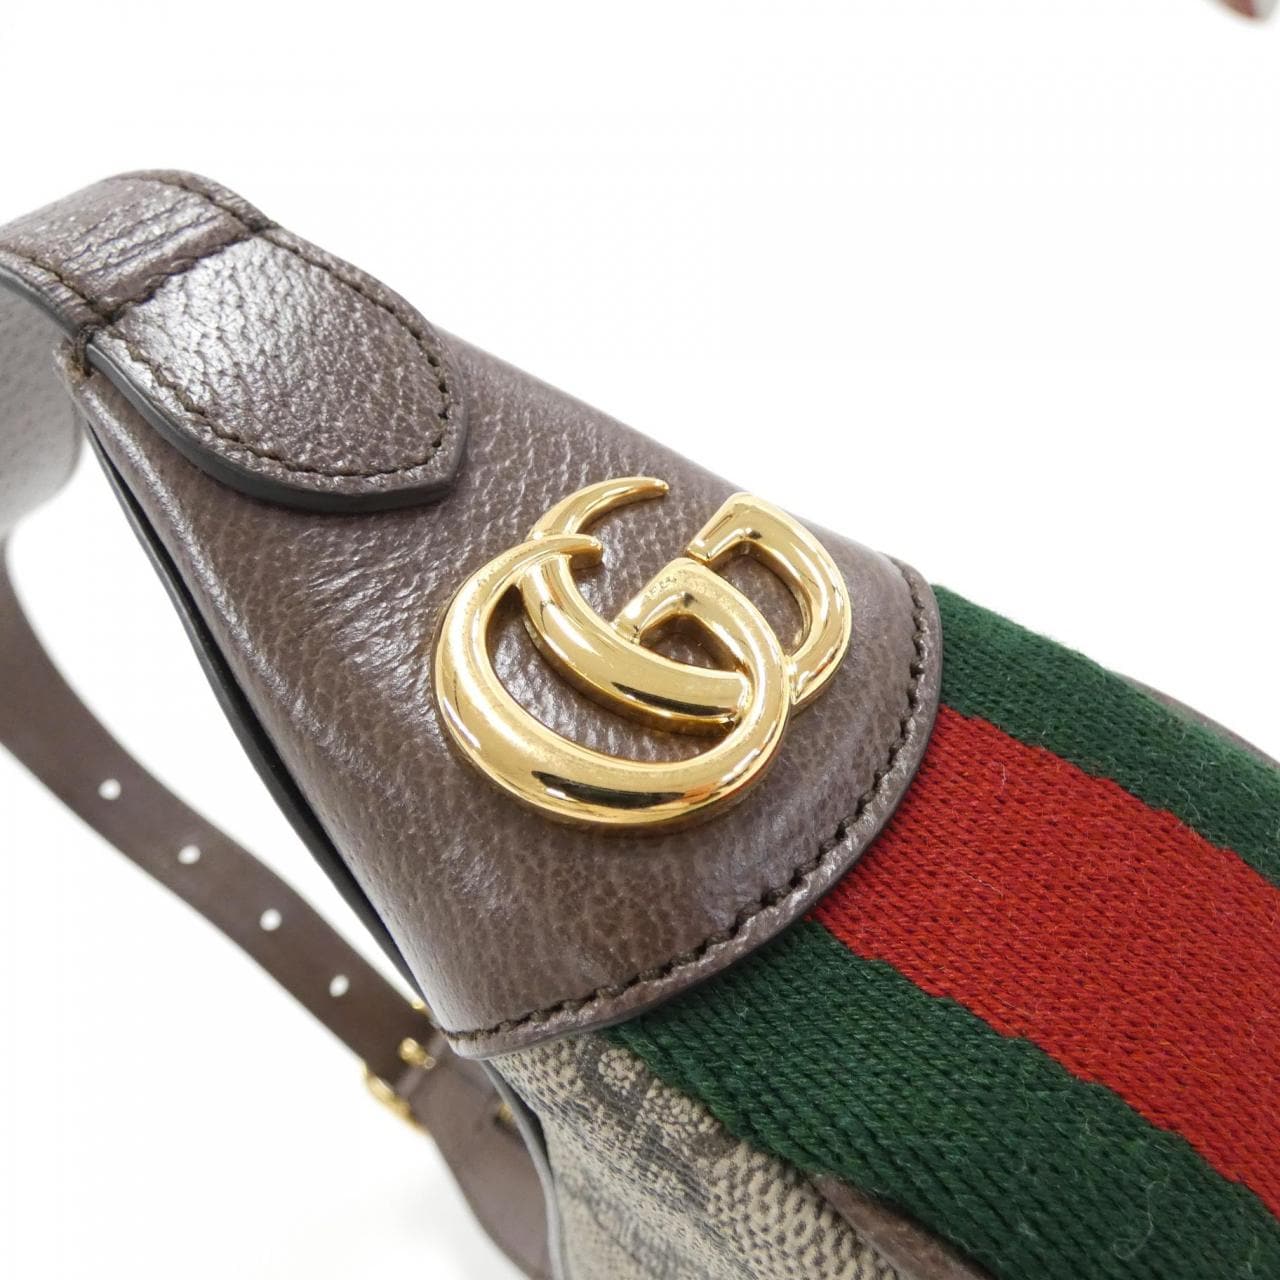 [BRAND NEW] Gucci OPHIDIA 658551 96IWG Shoulder Bag